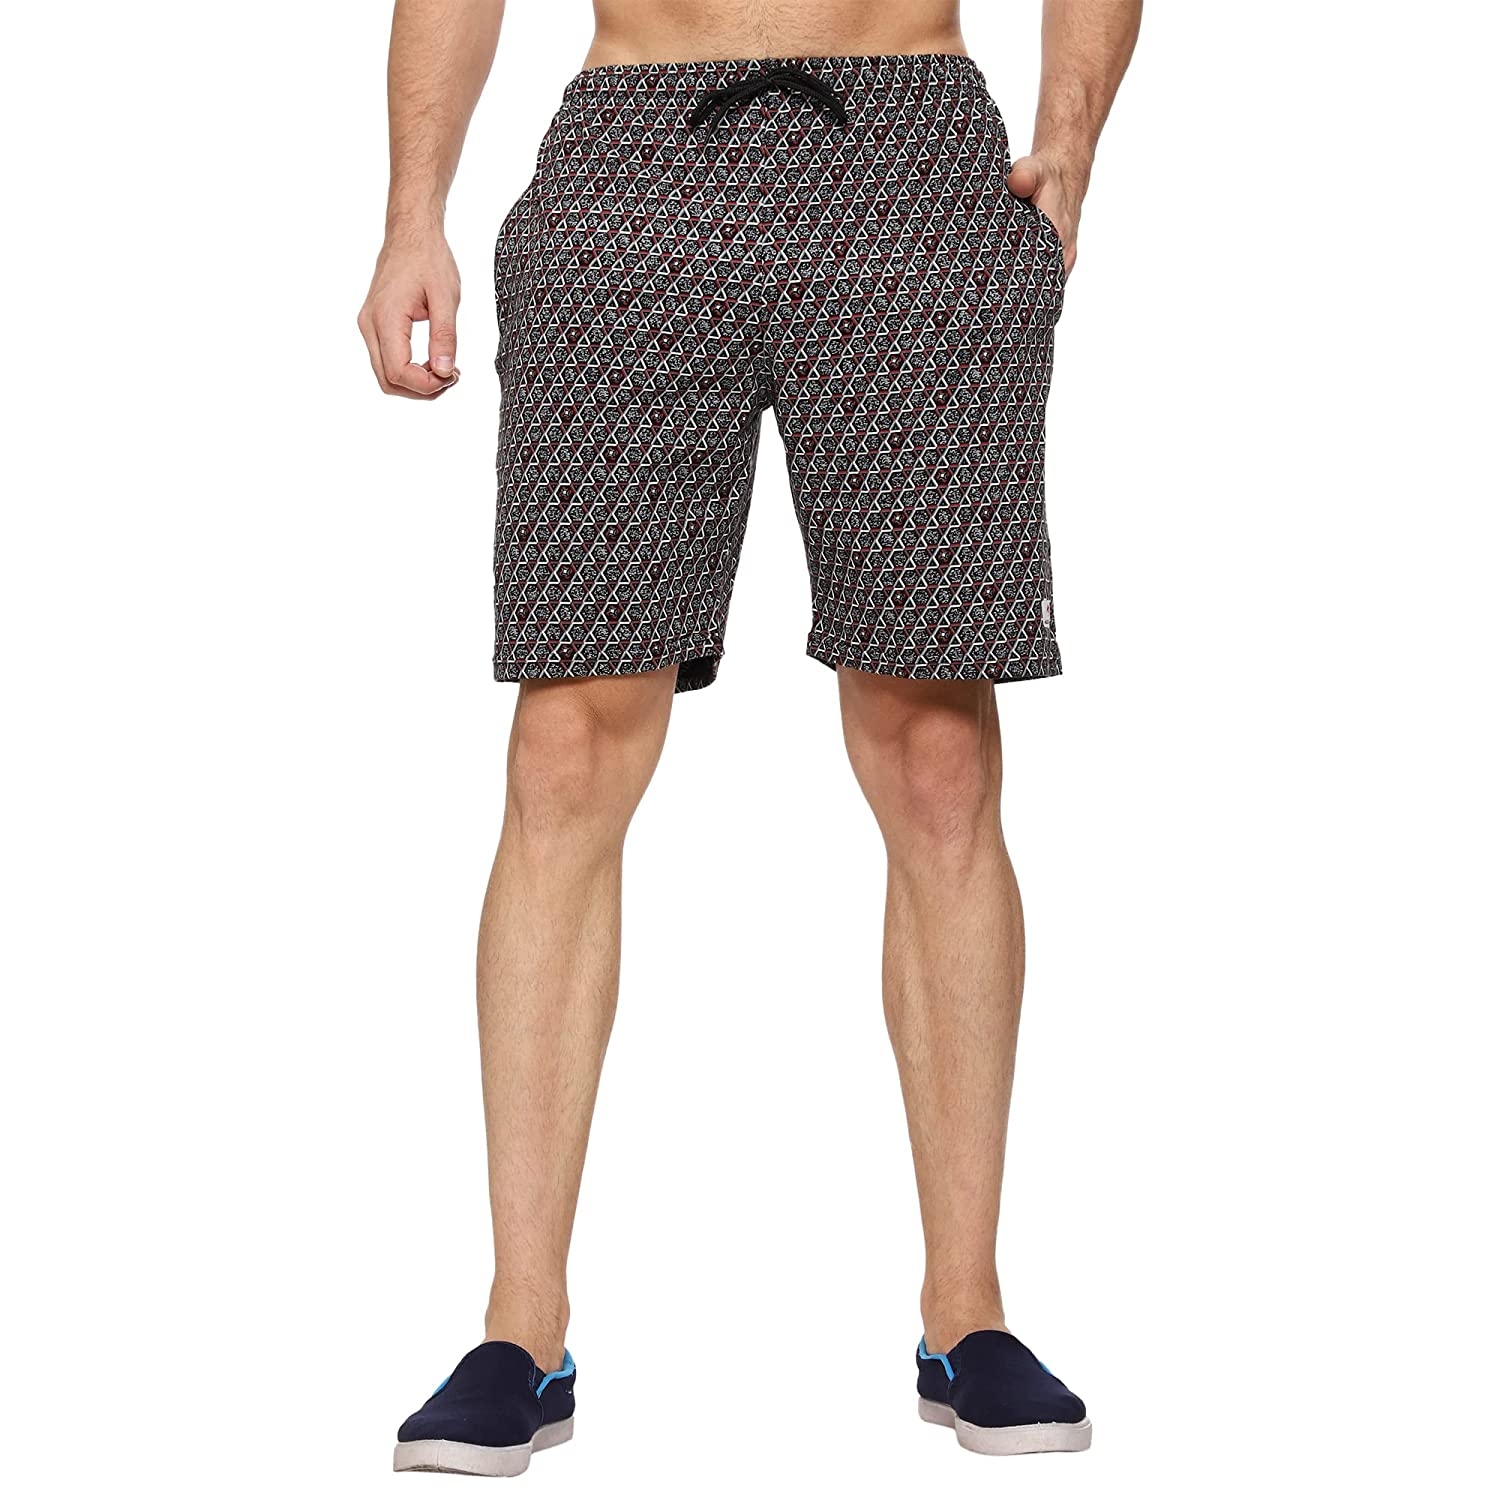 Moovfree Mens Cotton Bermuda Printed Casual Shorts Regular Fit Lounge Shorts with Zip Pockets, Congo Brown